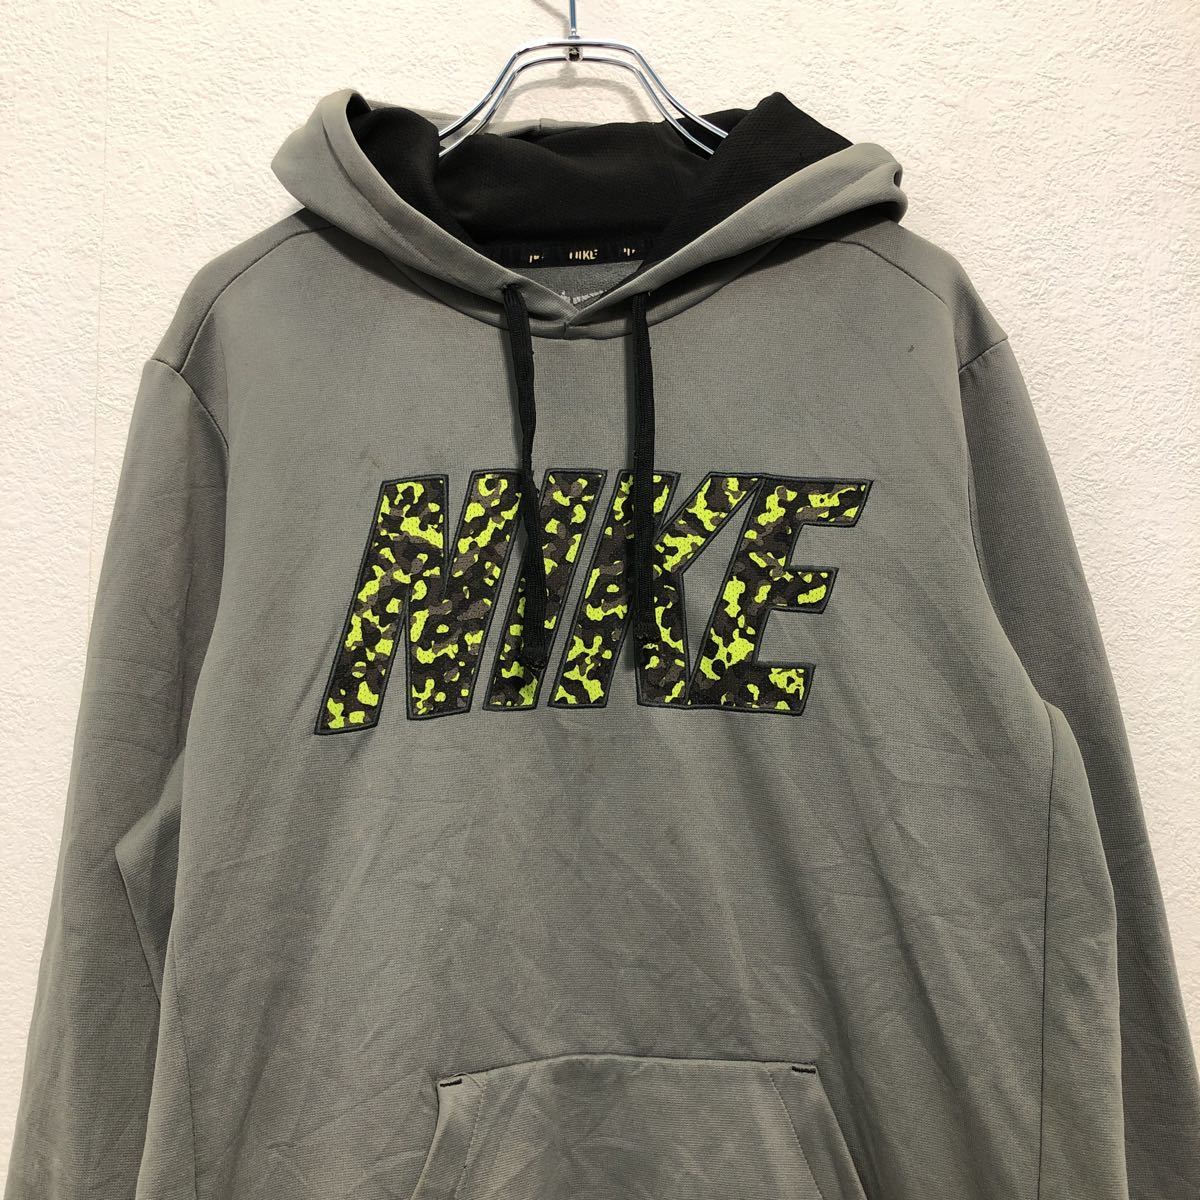 NIKE Logo тренировочный футболка S хаки Nike f-ti карман б/у одежда . America скупка a506-5920